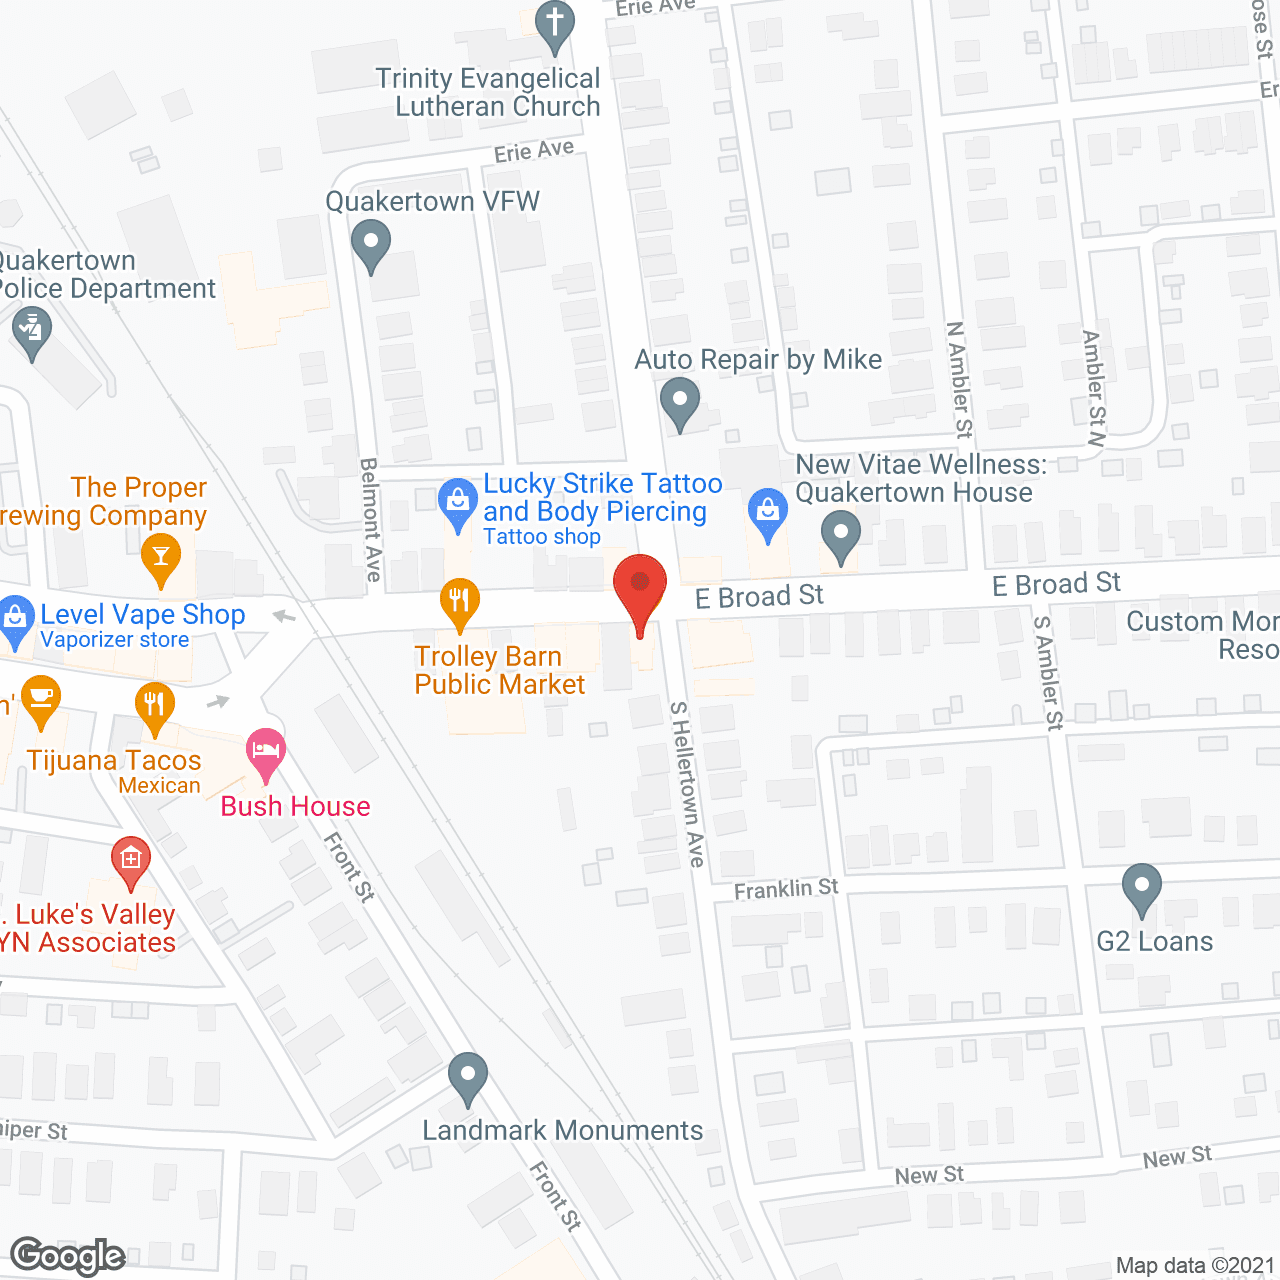 Pathways in google map